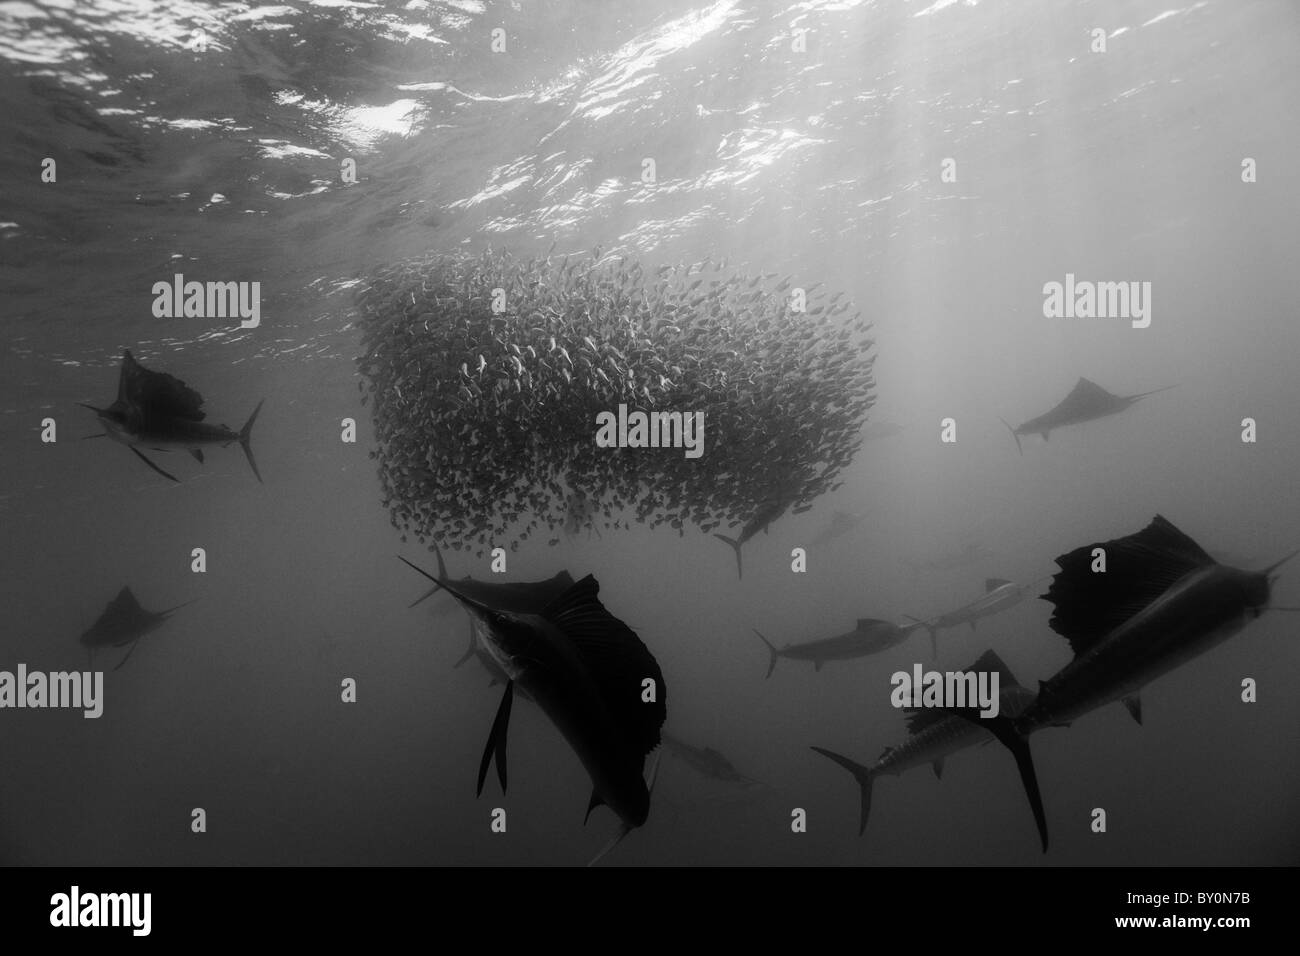 Sardina Black and White Stock Photos & Images - Alamy